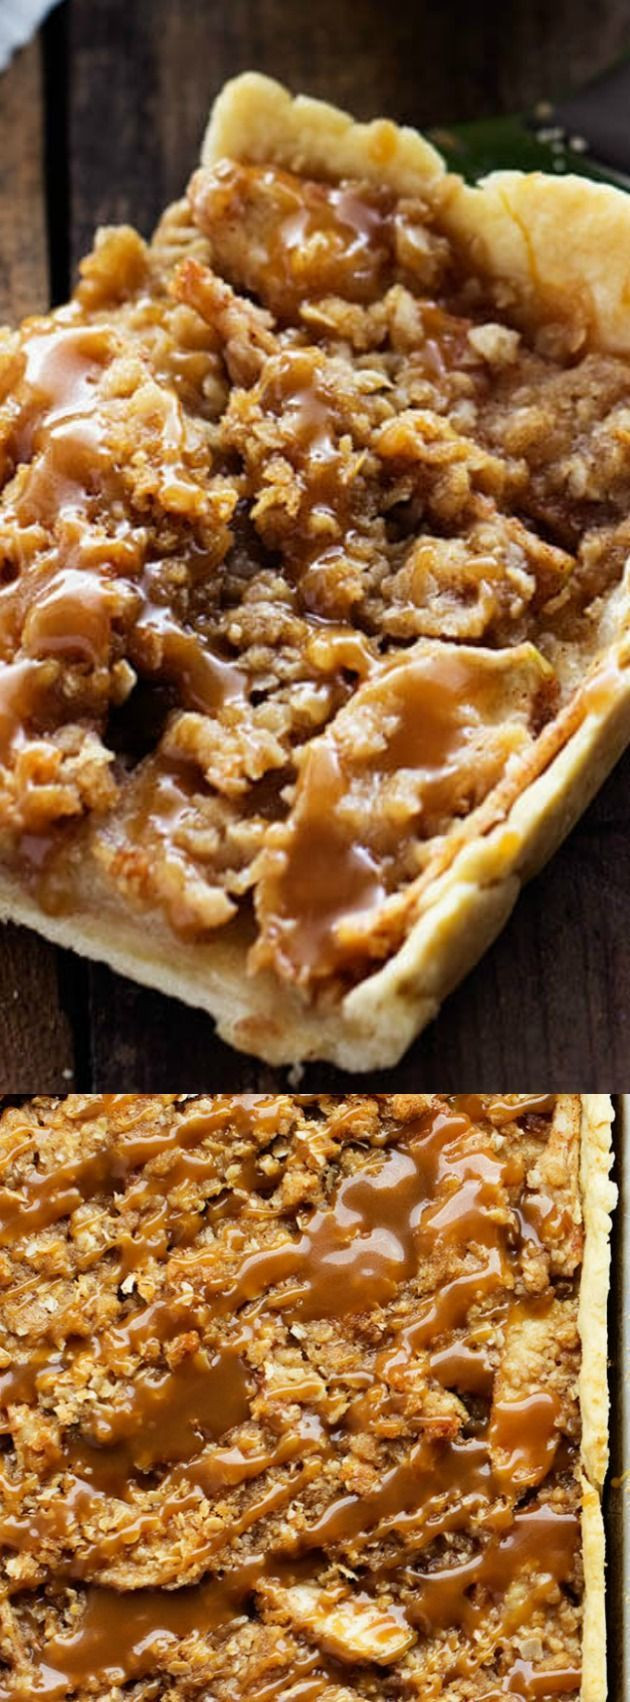 Fall Pie Recipes
 Best 25 Fall desserts ideas on Pinterest